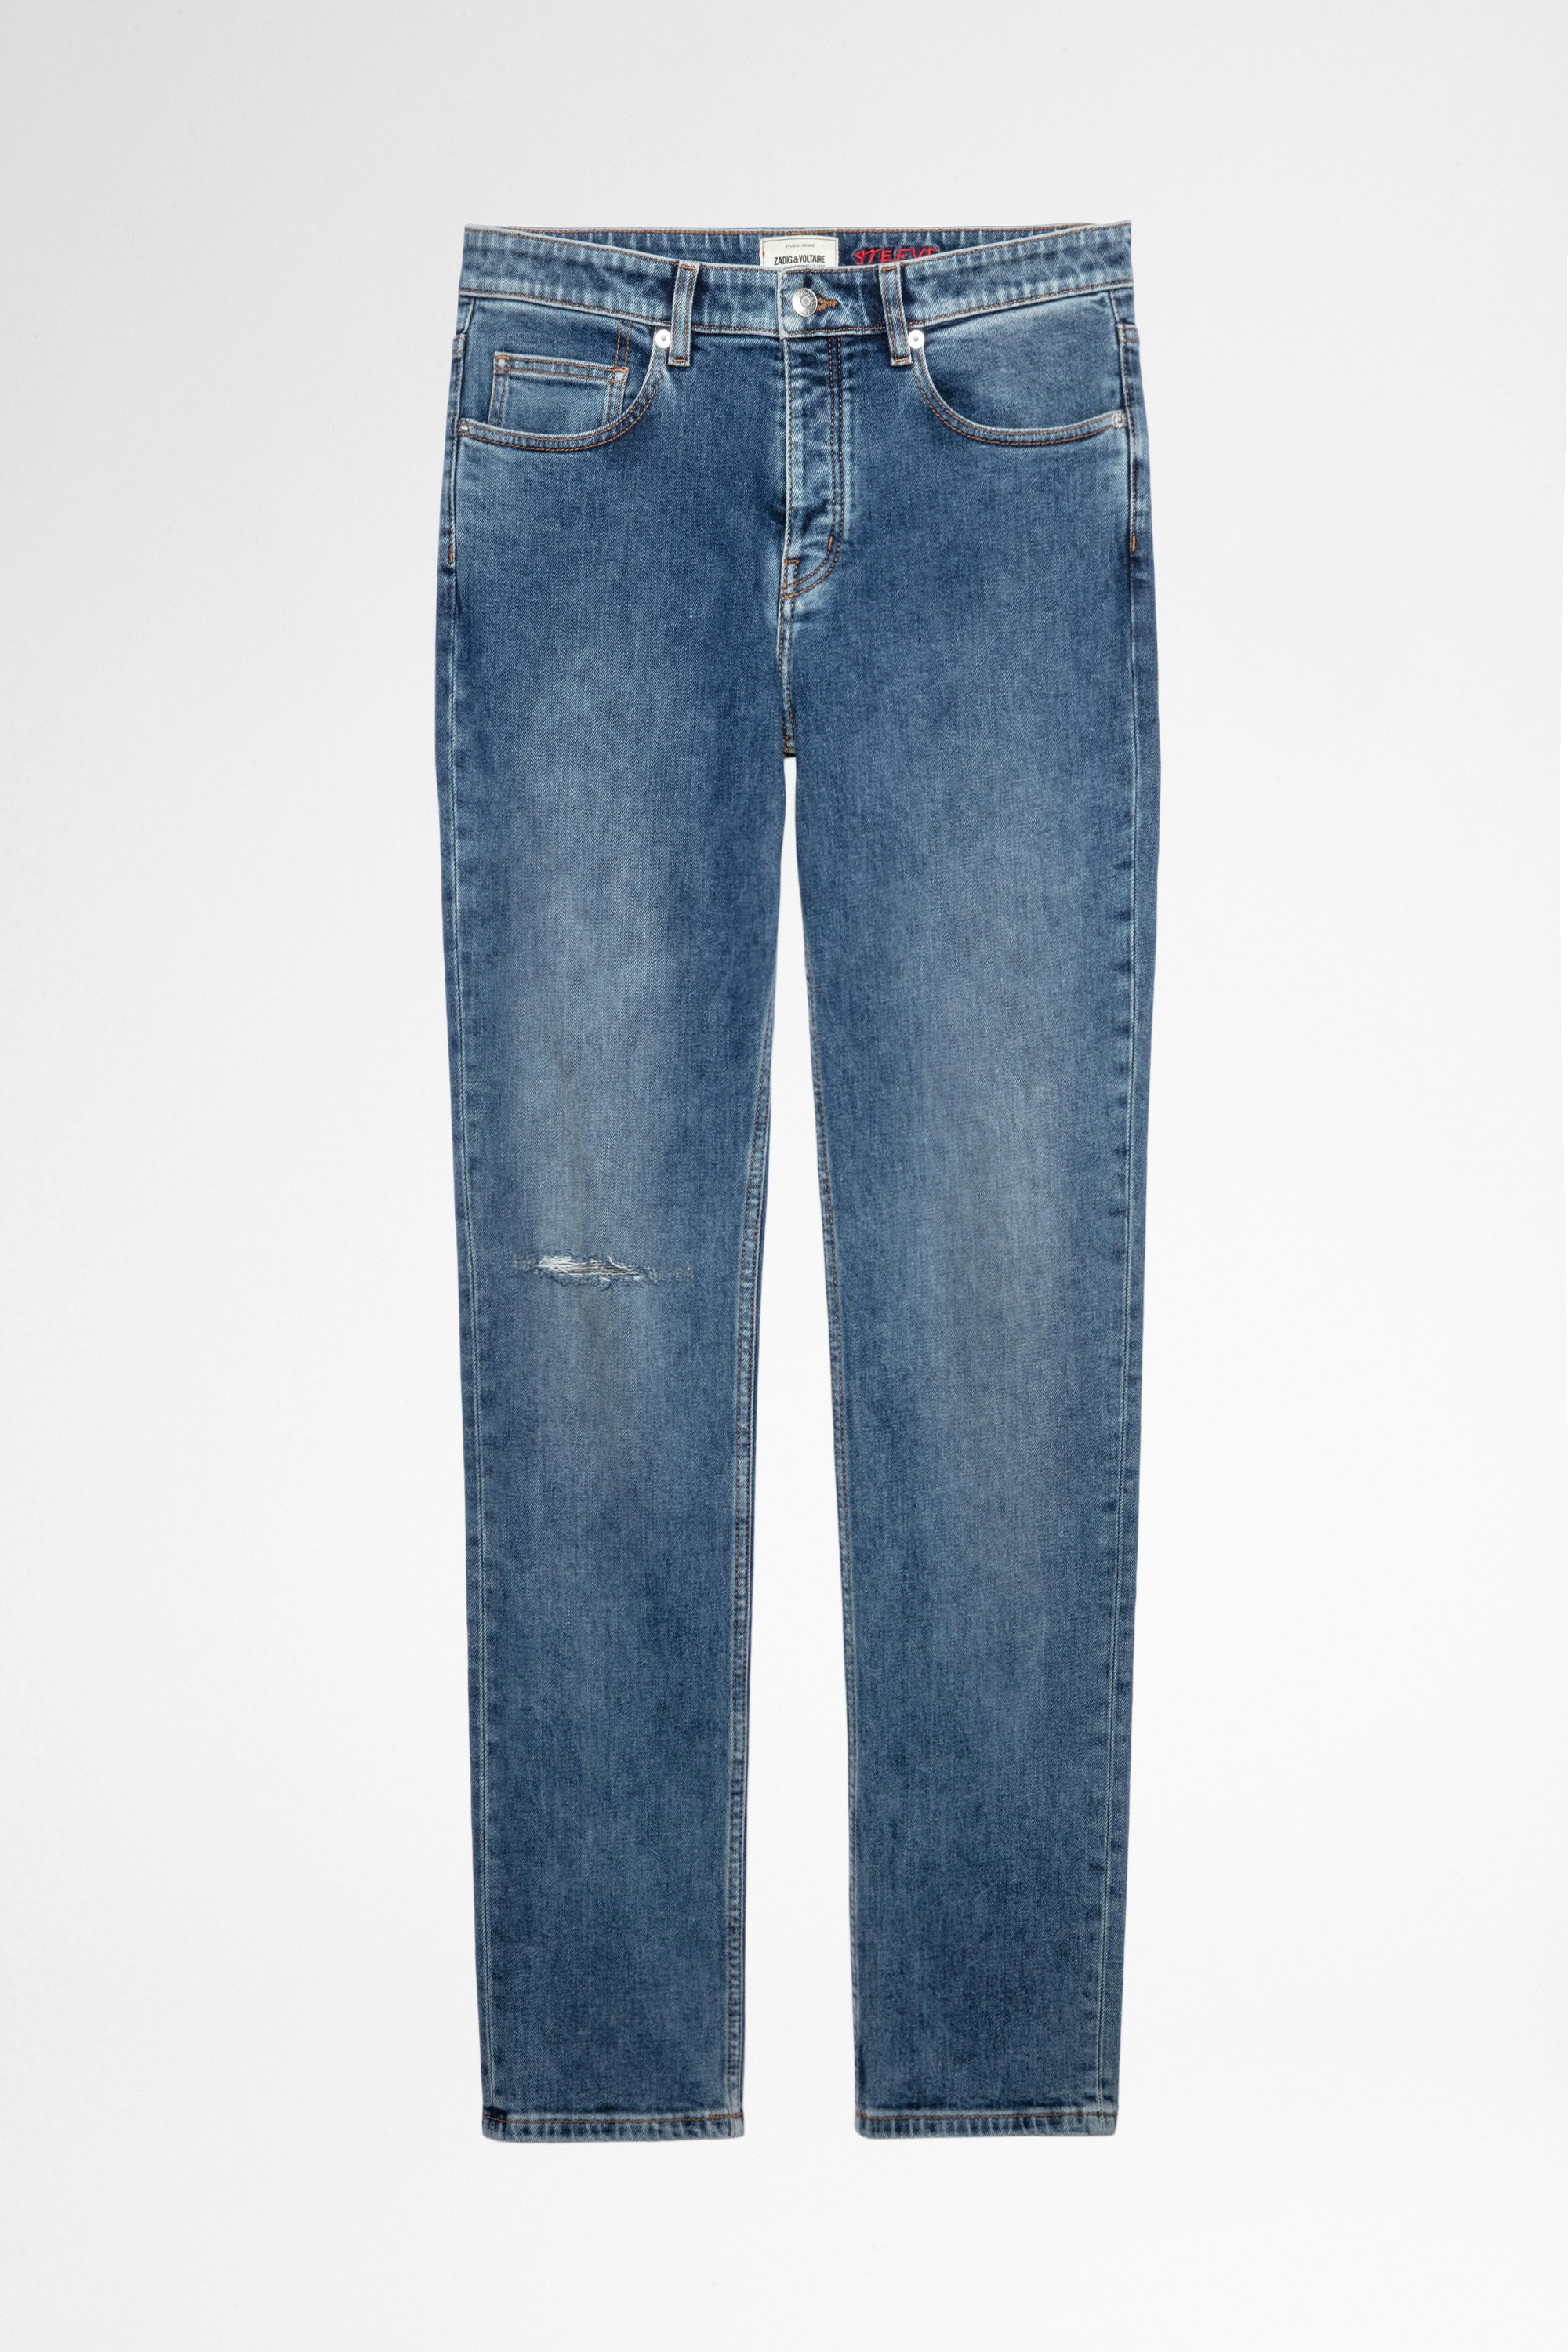 Steeve Jeans Men's blue denim jeans, cut at the knees